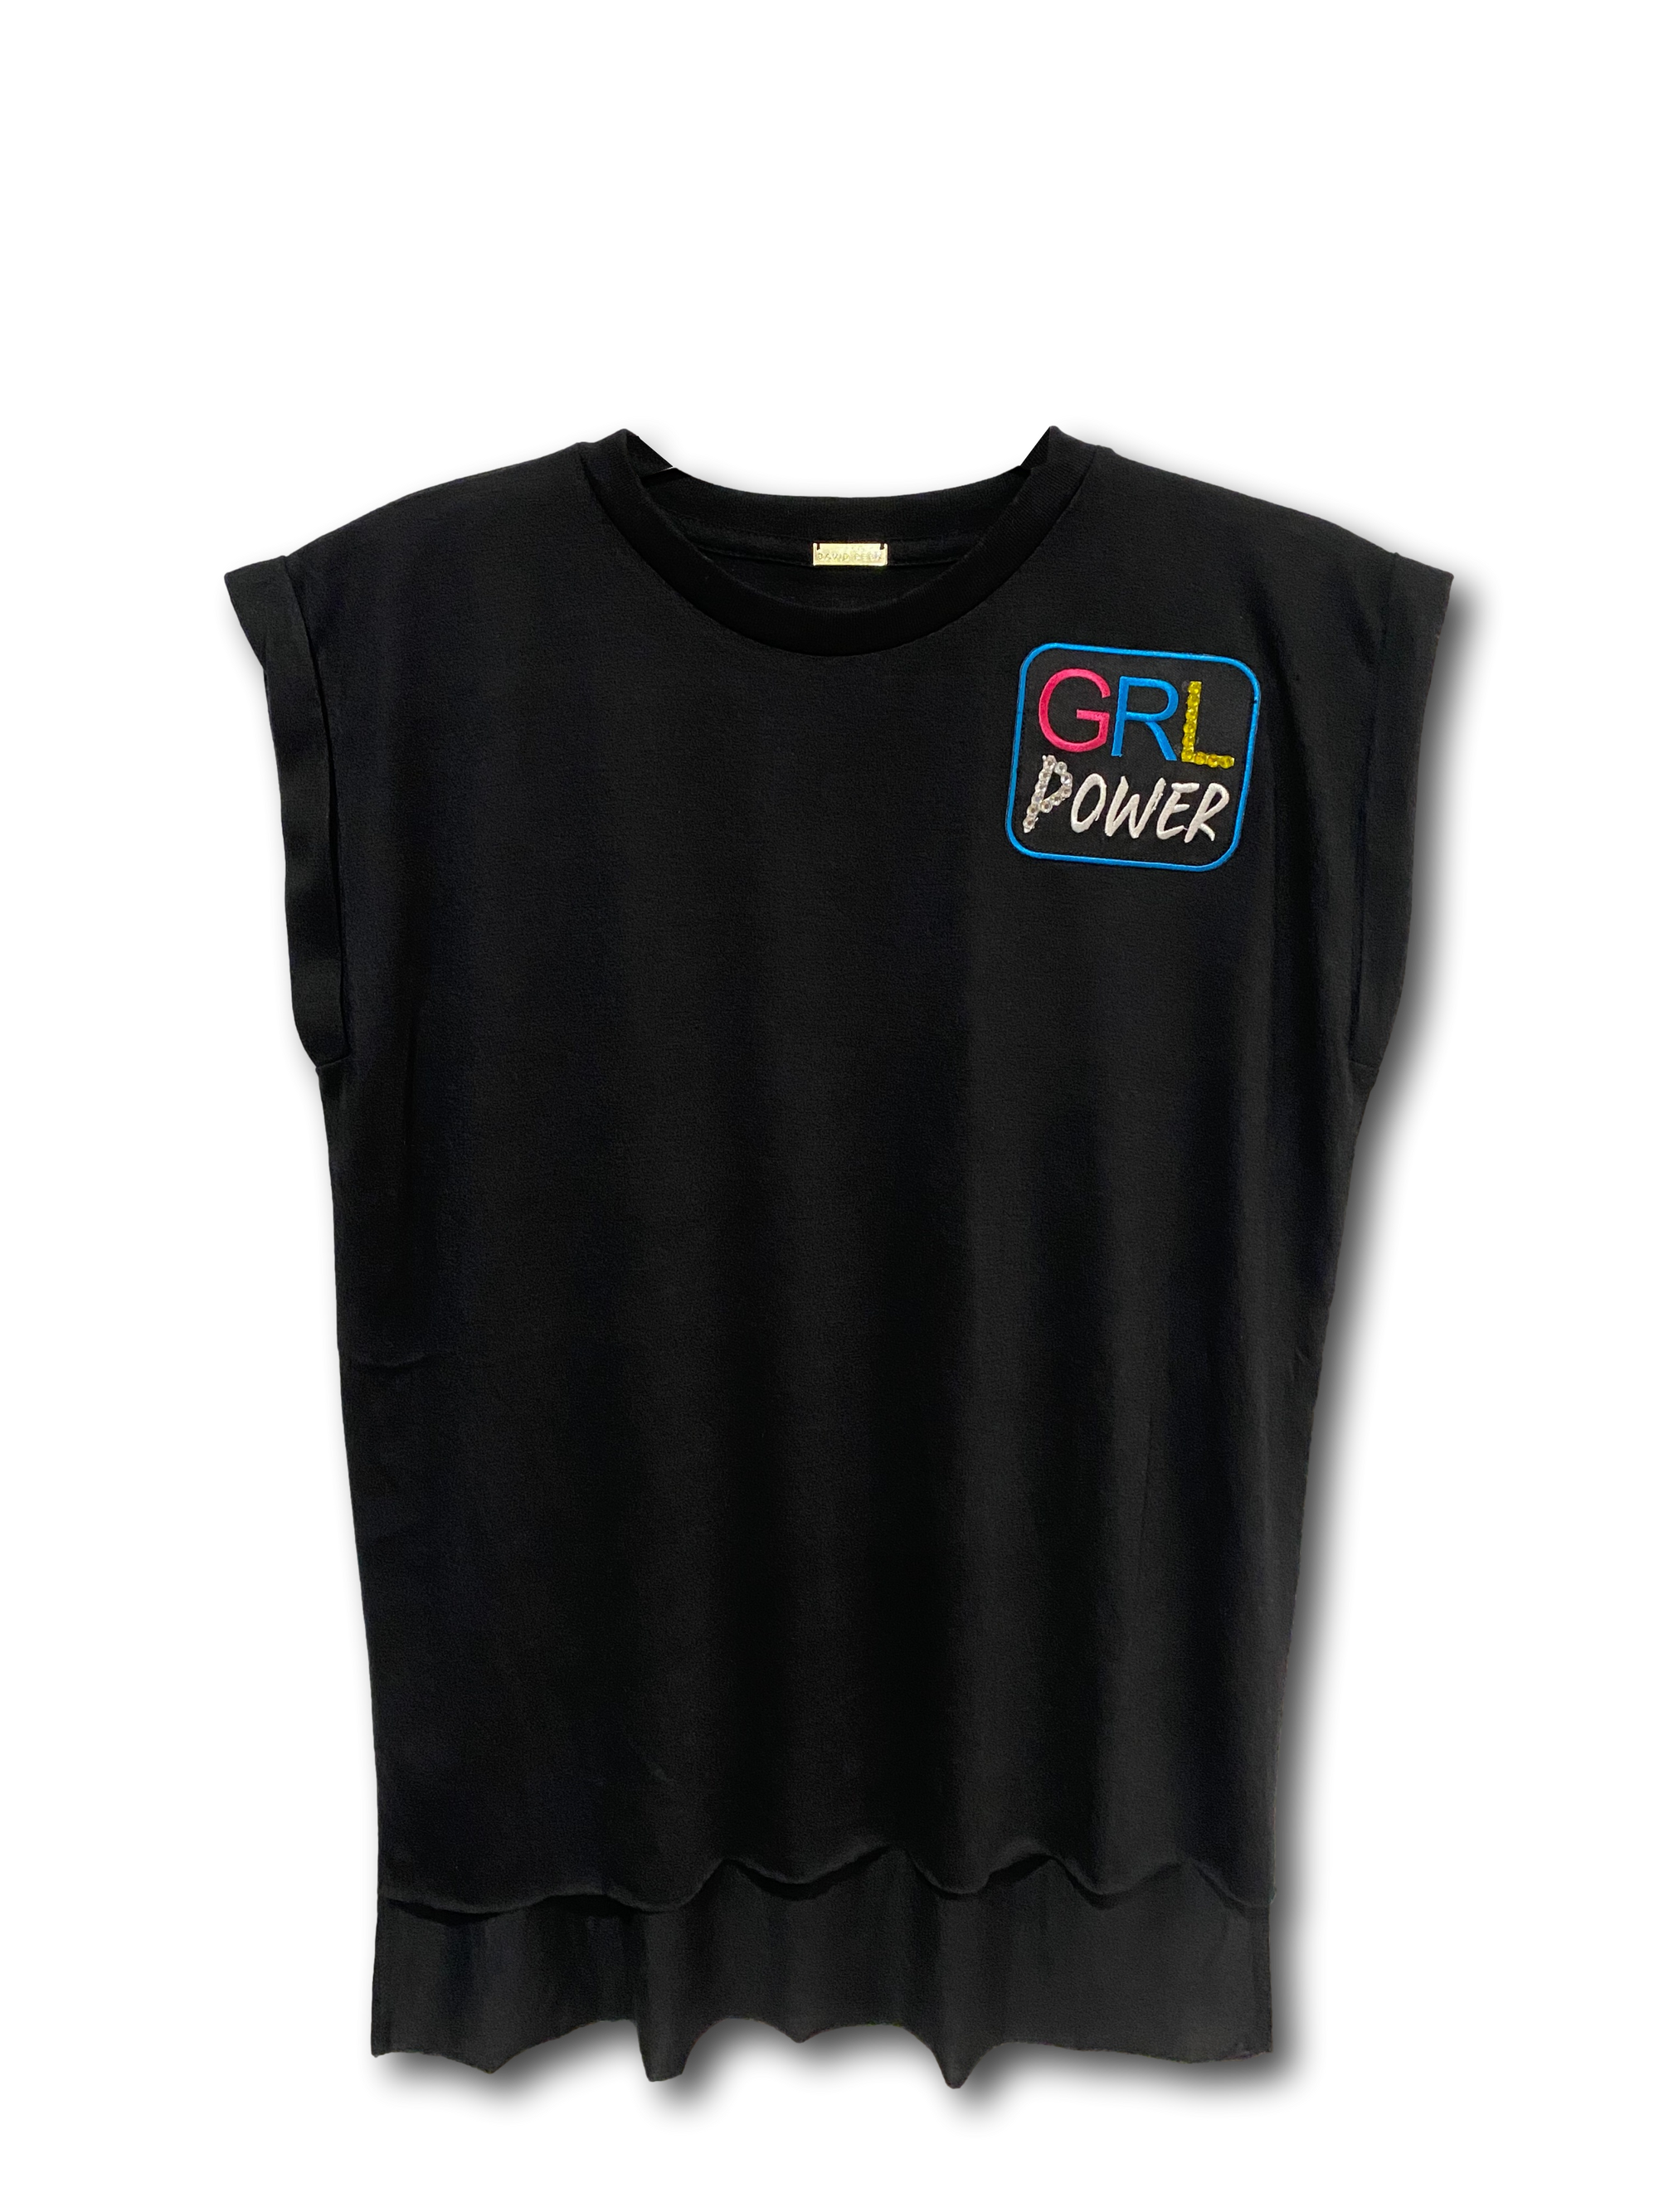 Girl Power Stevie T-Shirt Designed by David Peck for The Women's Fund Houston.